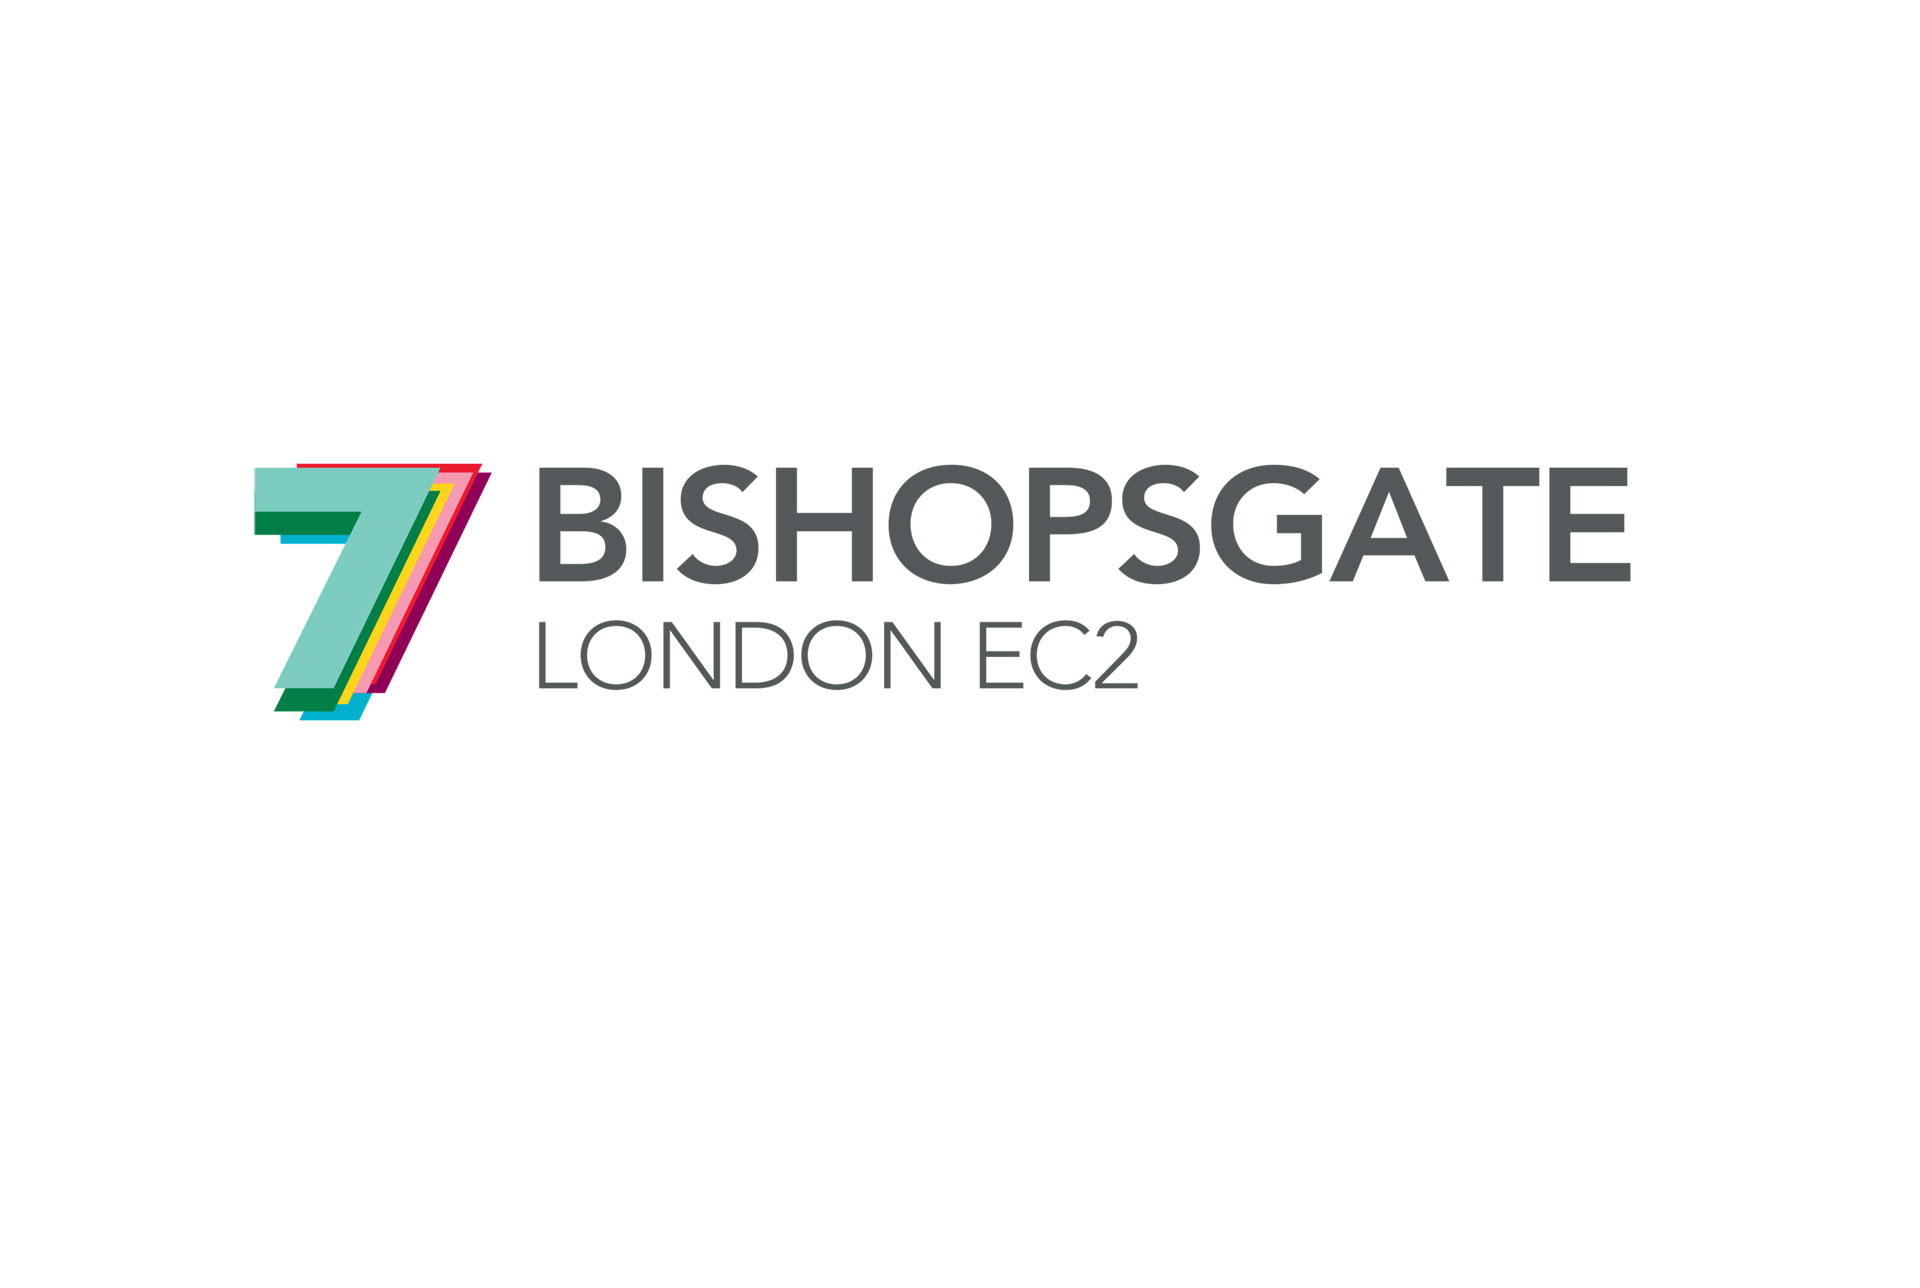 7bishopsgate-logo.jpg